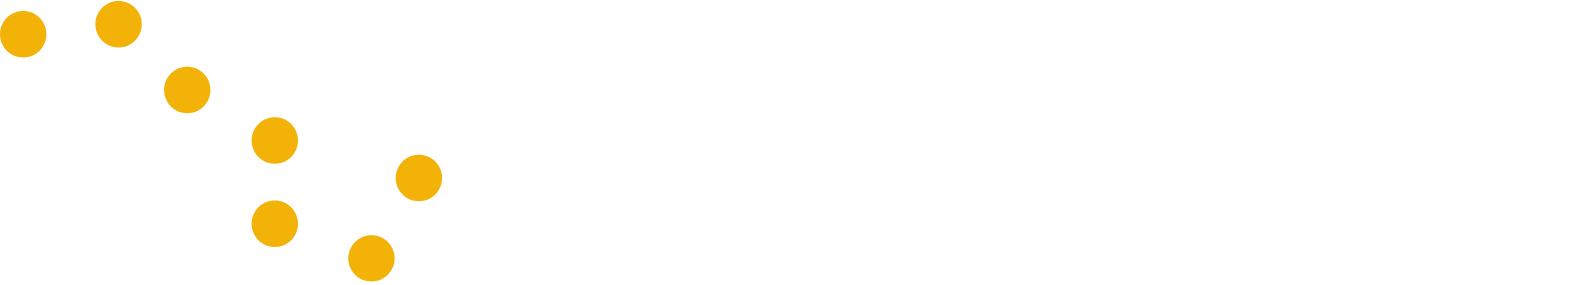 Iridium Communications logo large for dark backgrounds (transparent PNG)